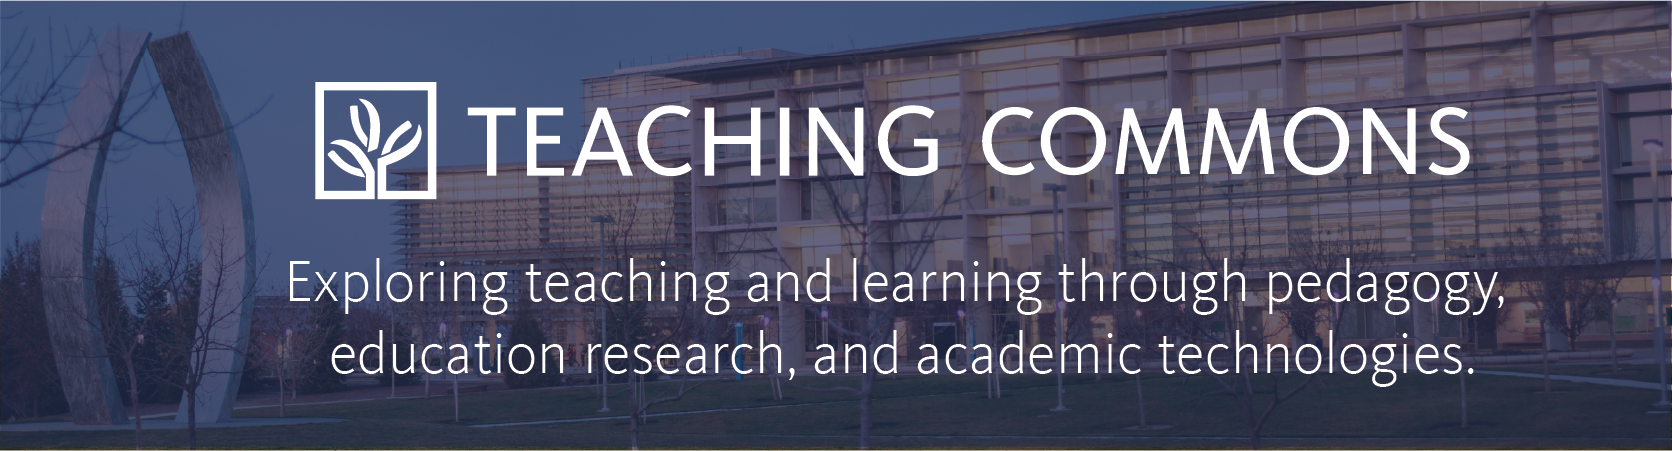 teaching commons header image